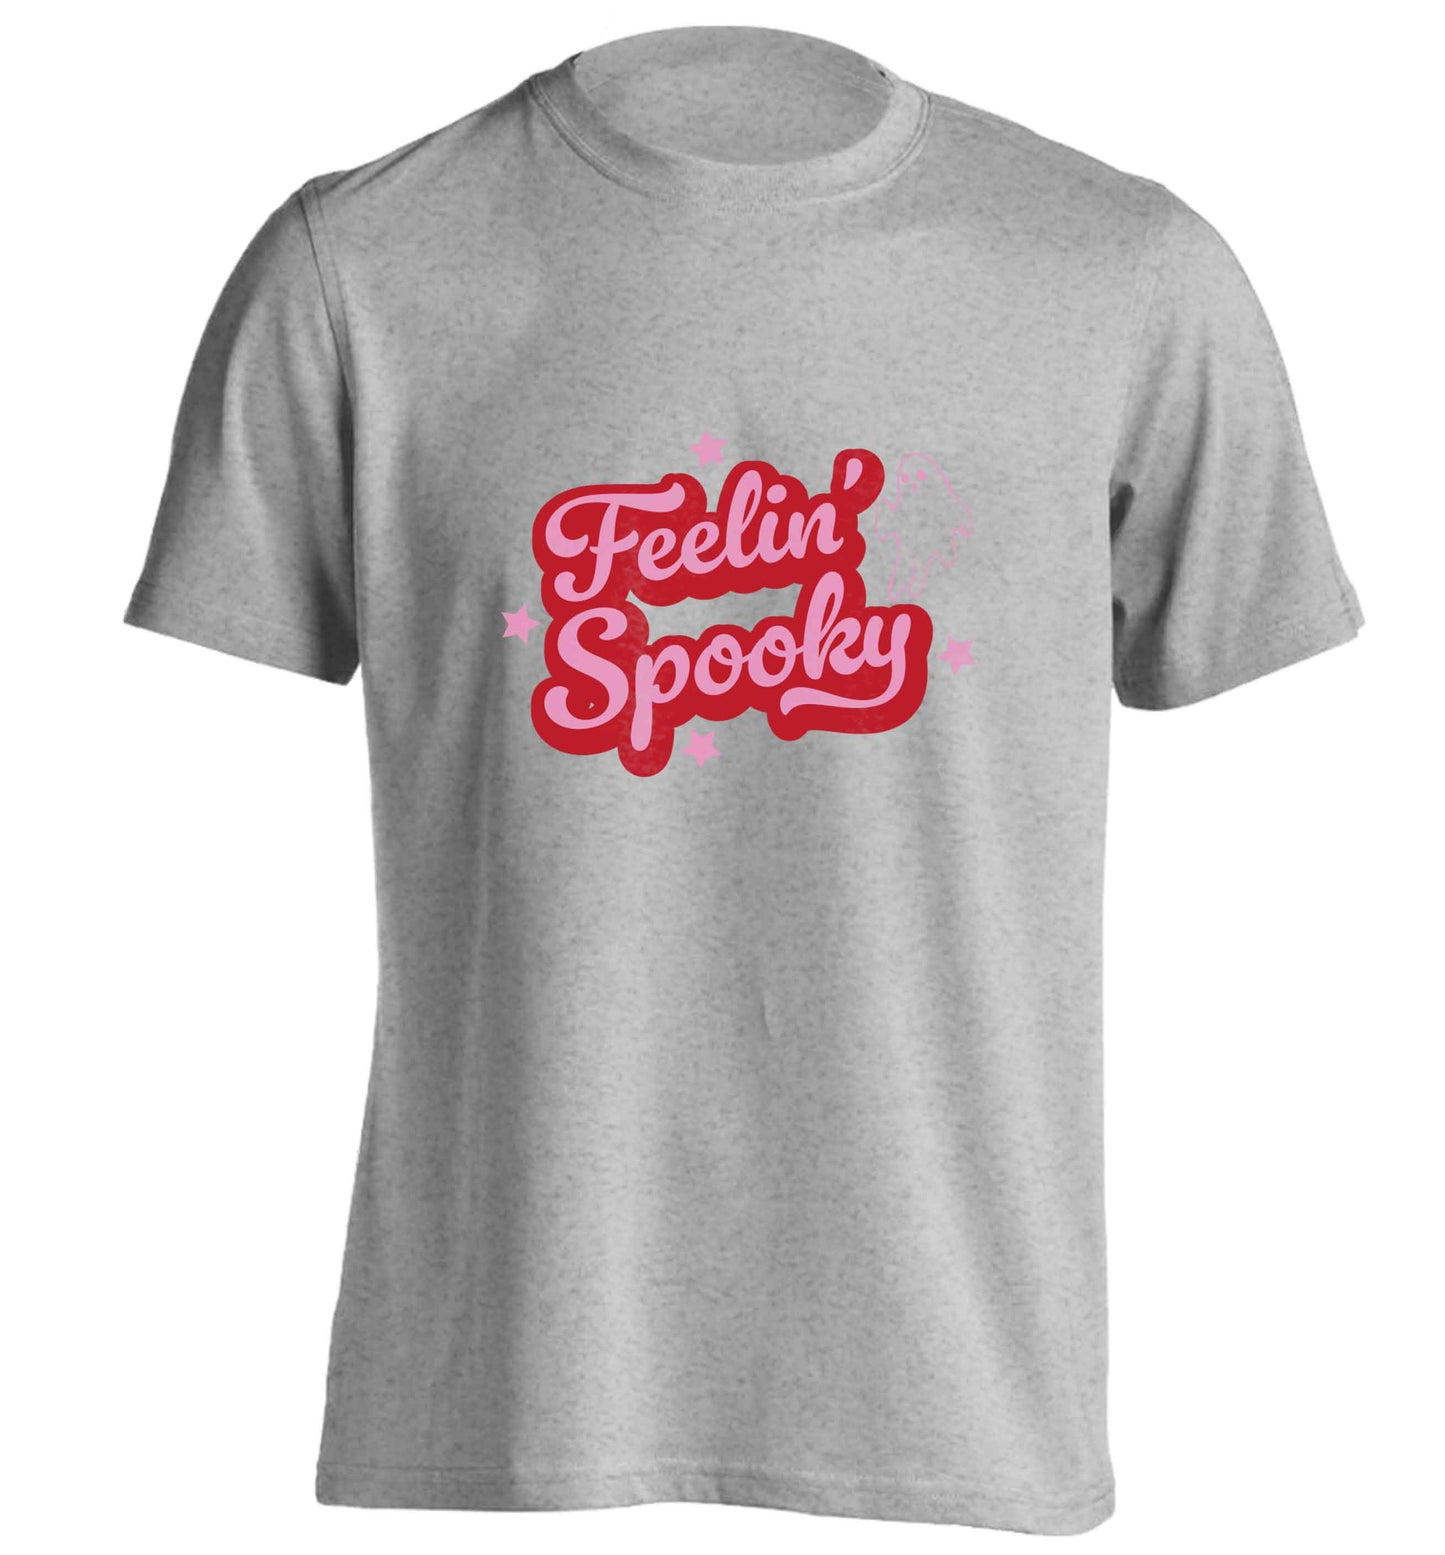 Feelin' Spooky Kit adults unisex grey Tshirt 2XL